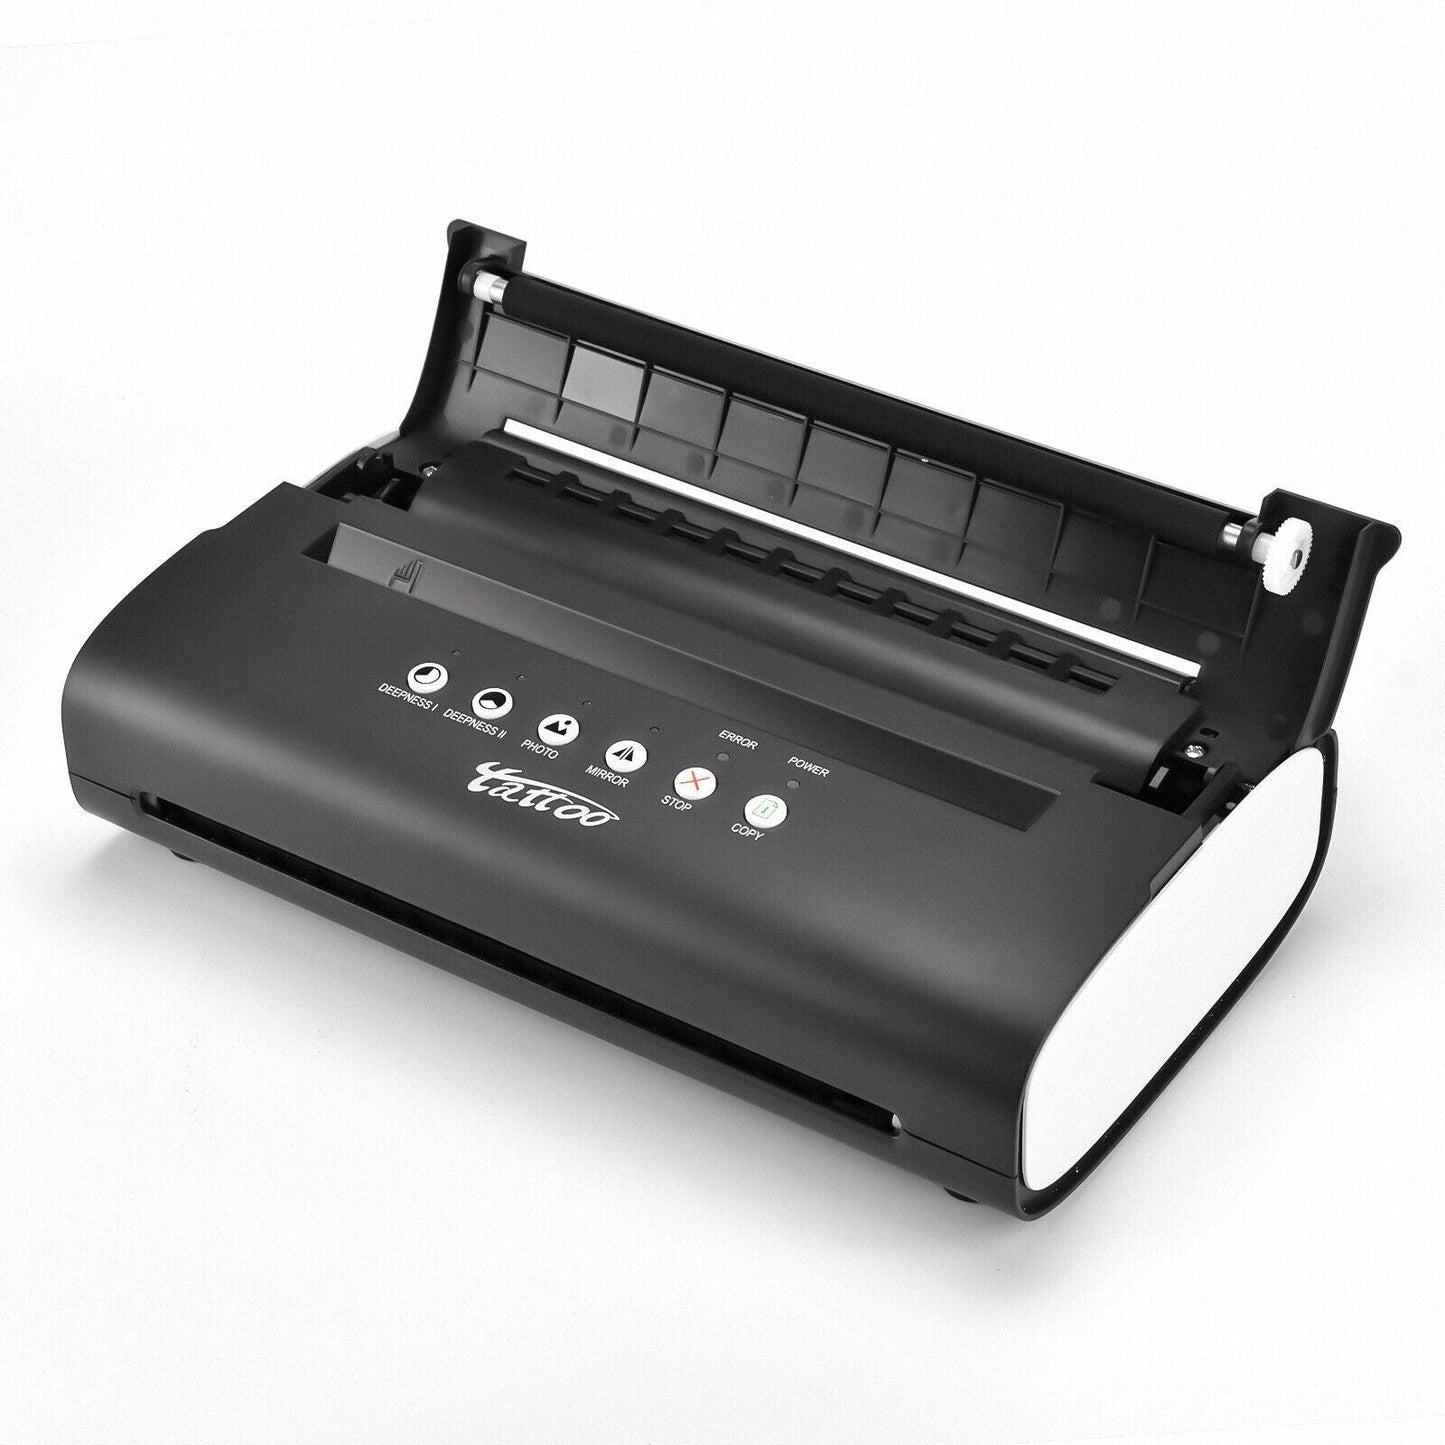 MT200 Tattoo Stencil Printer Transfer Thermal Copier Machine - Tattoo Everything Supplies